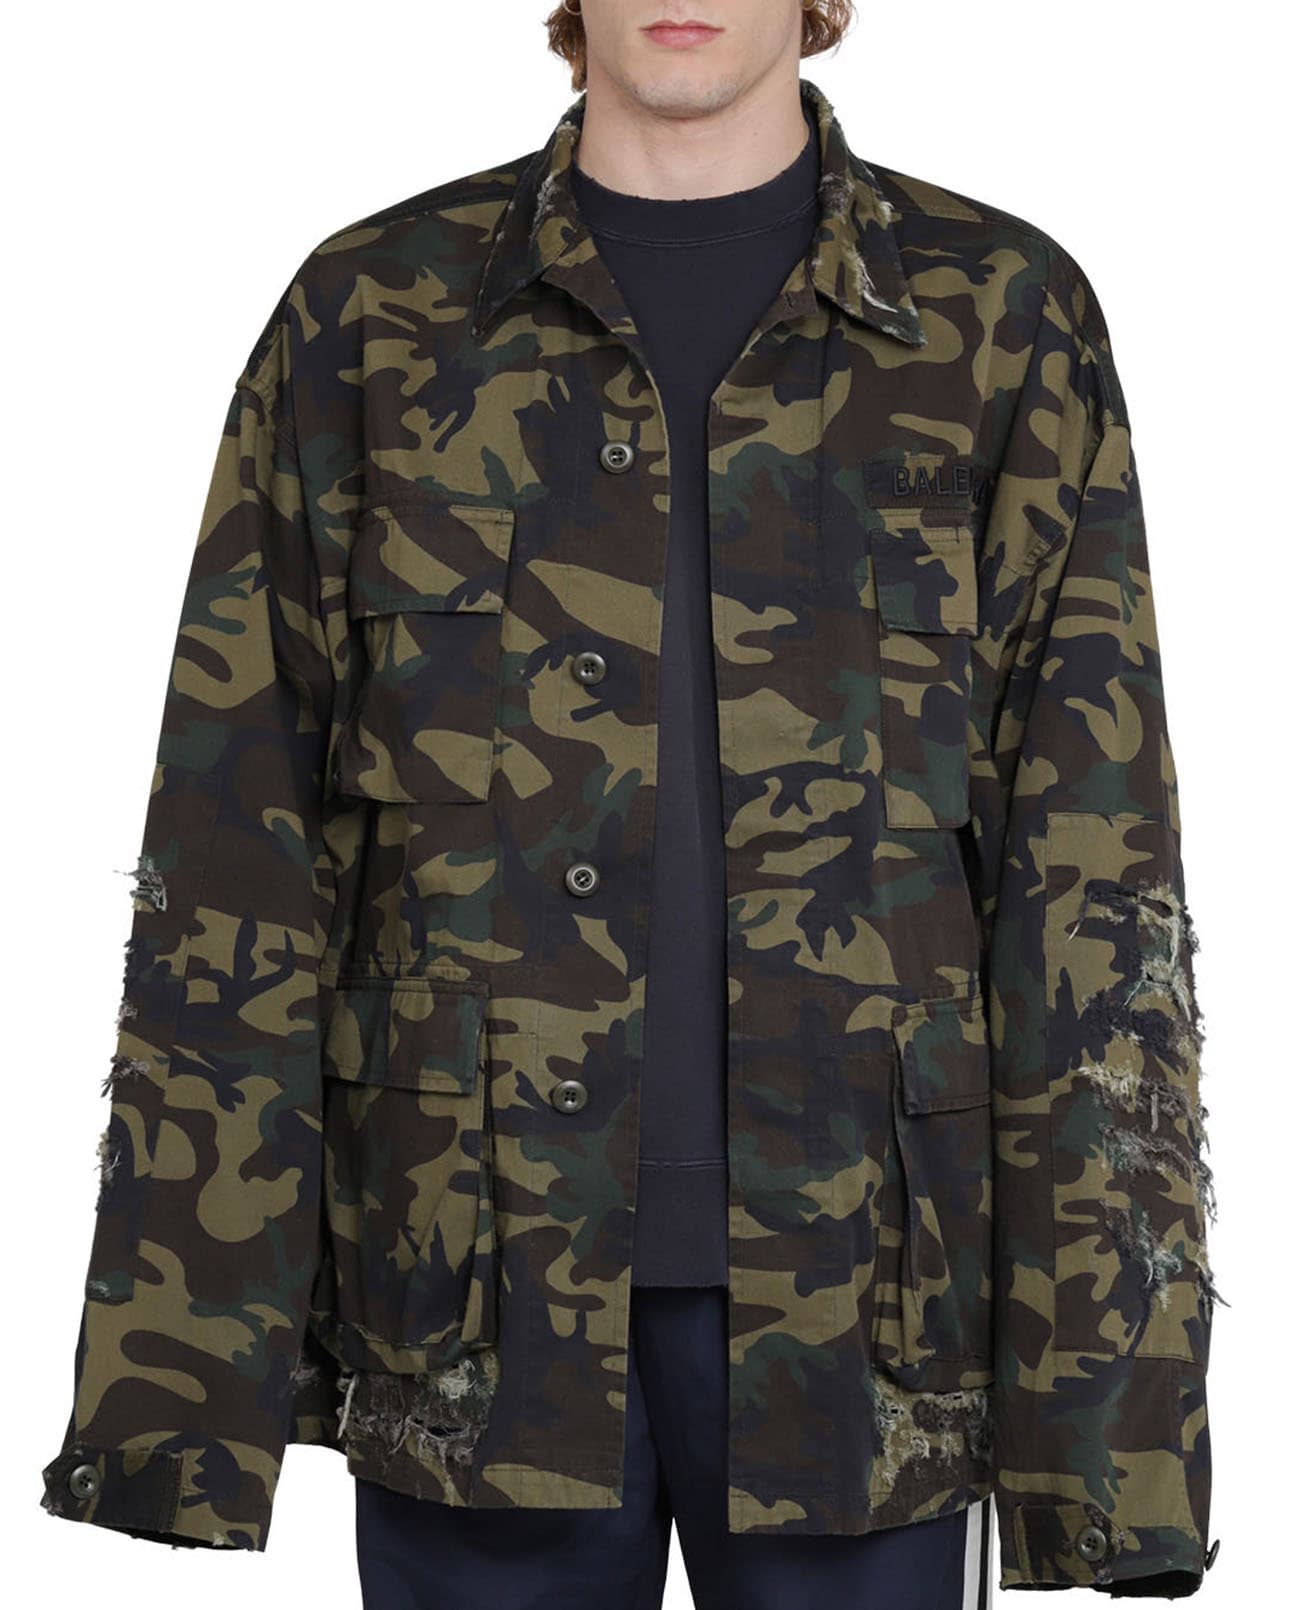 Balenciaga Camouflage Army Jacket